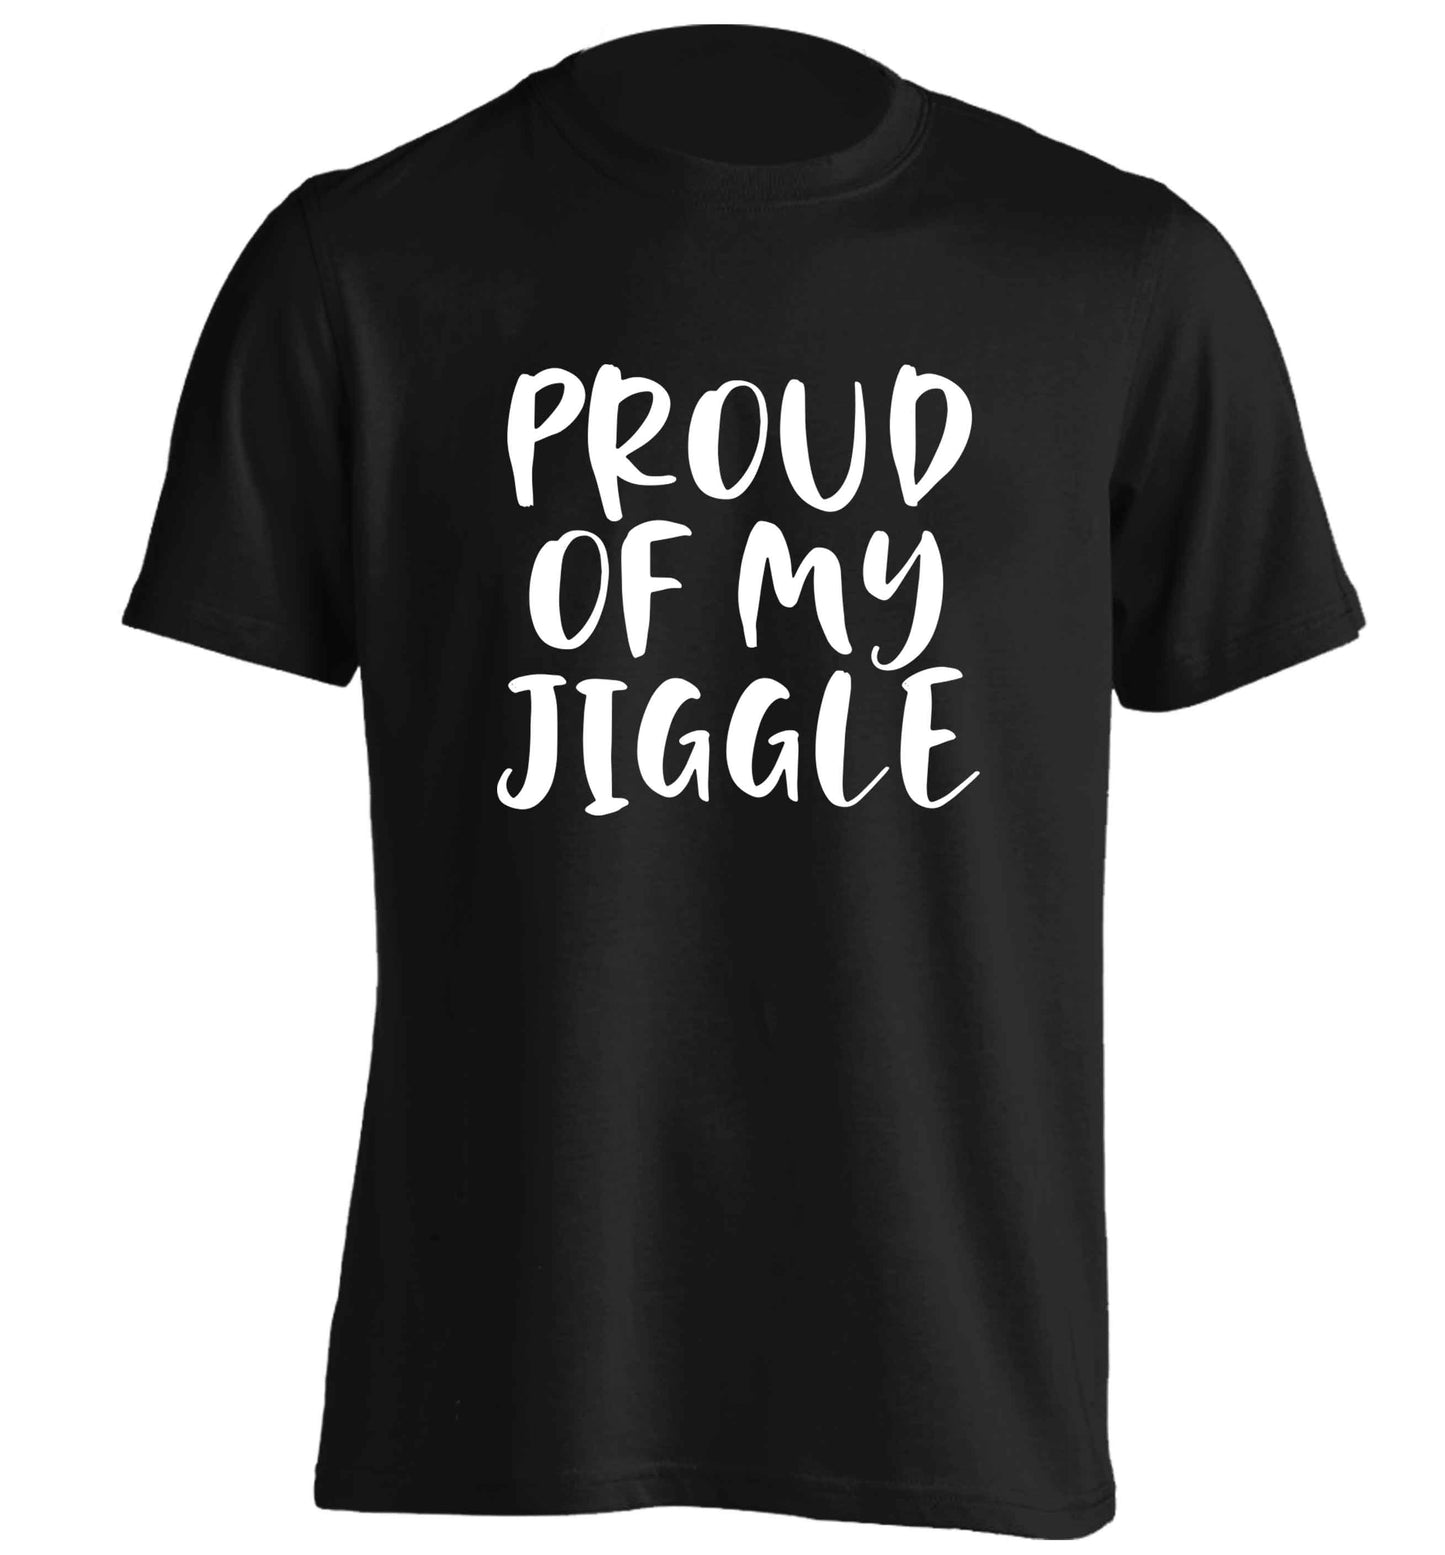 Proud of my jiggle adults unisex black Tshirt 2XL